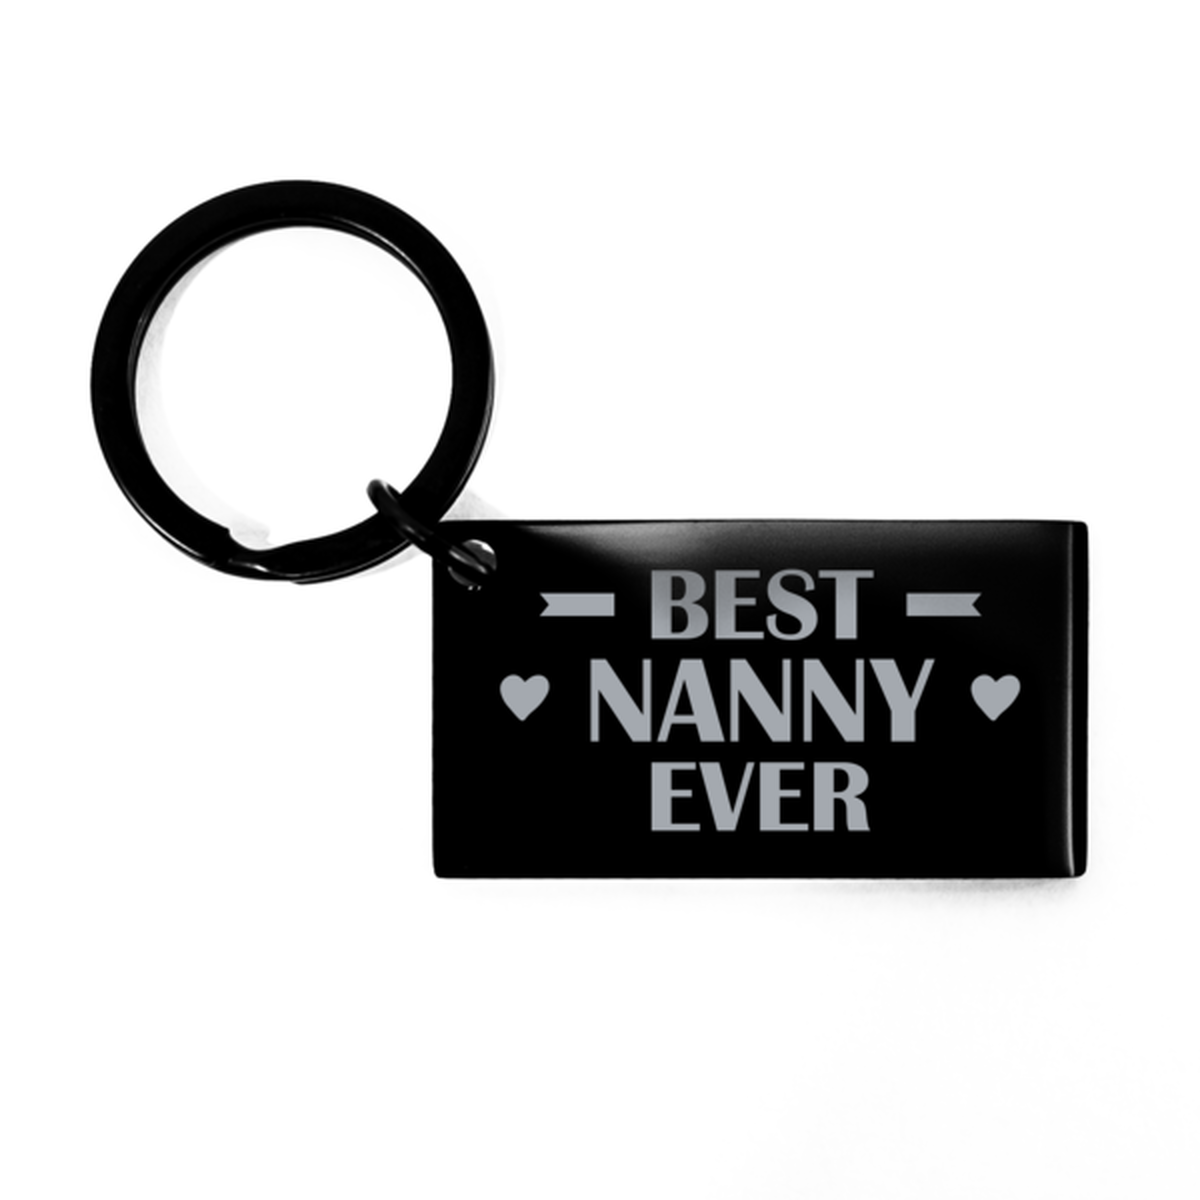 Best Nanny Ever Nanny Gifts, Funny Black Keychain For Nanny, Birthday Engraved Keyring Presents For Women